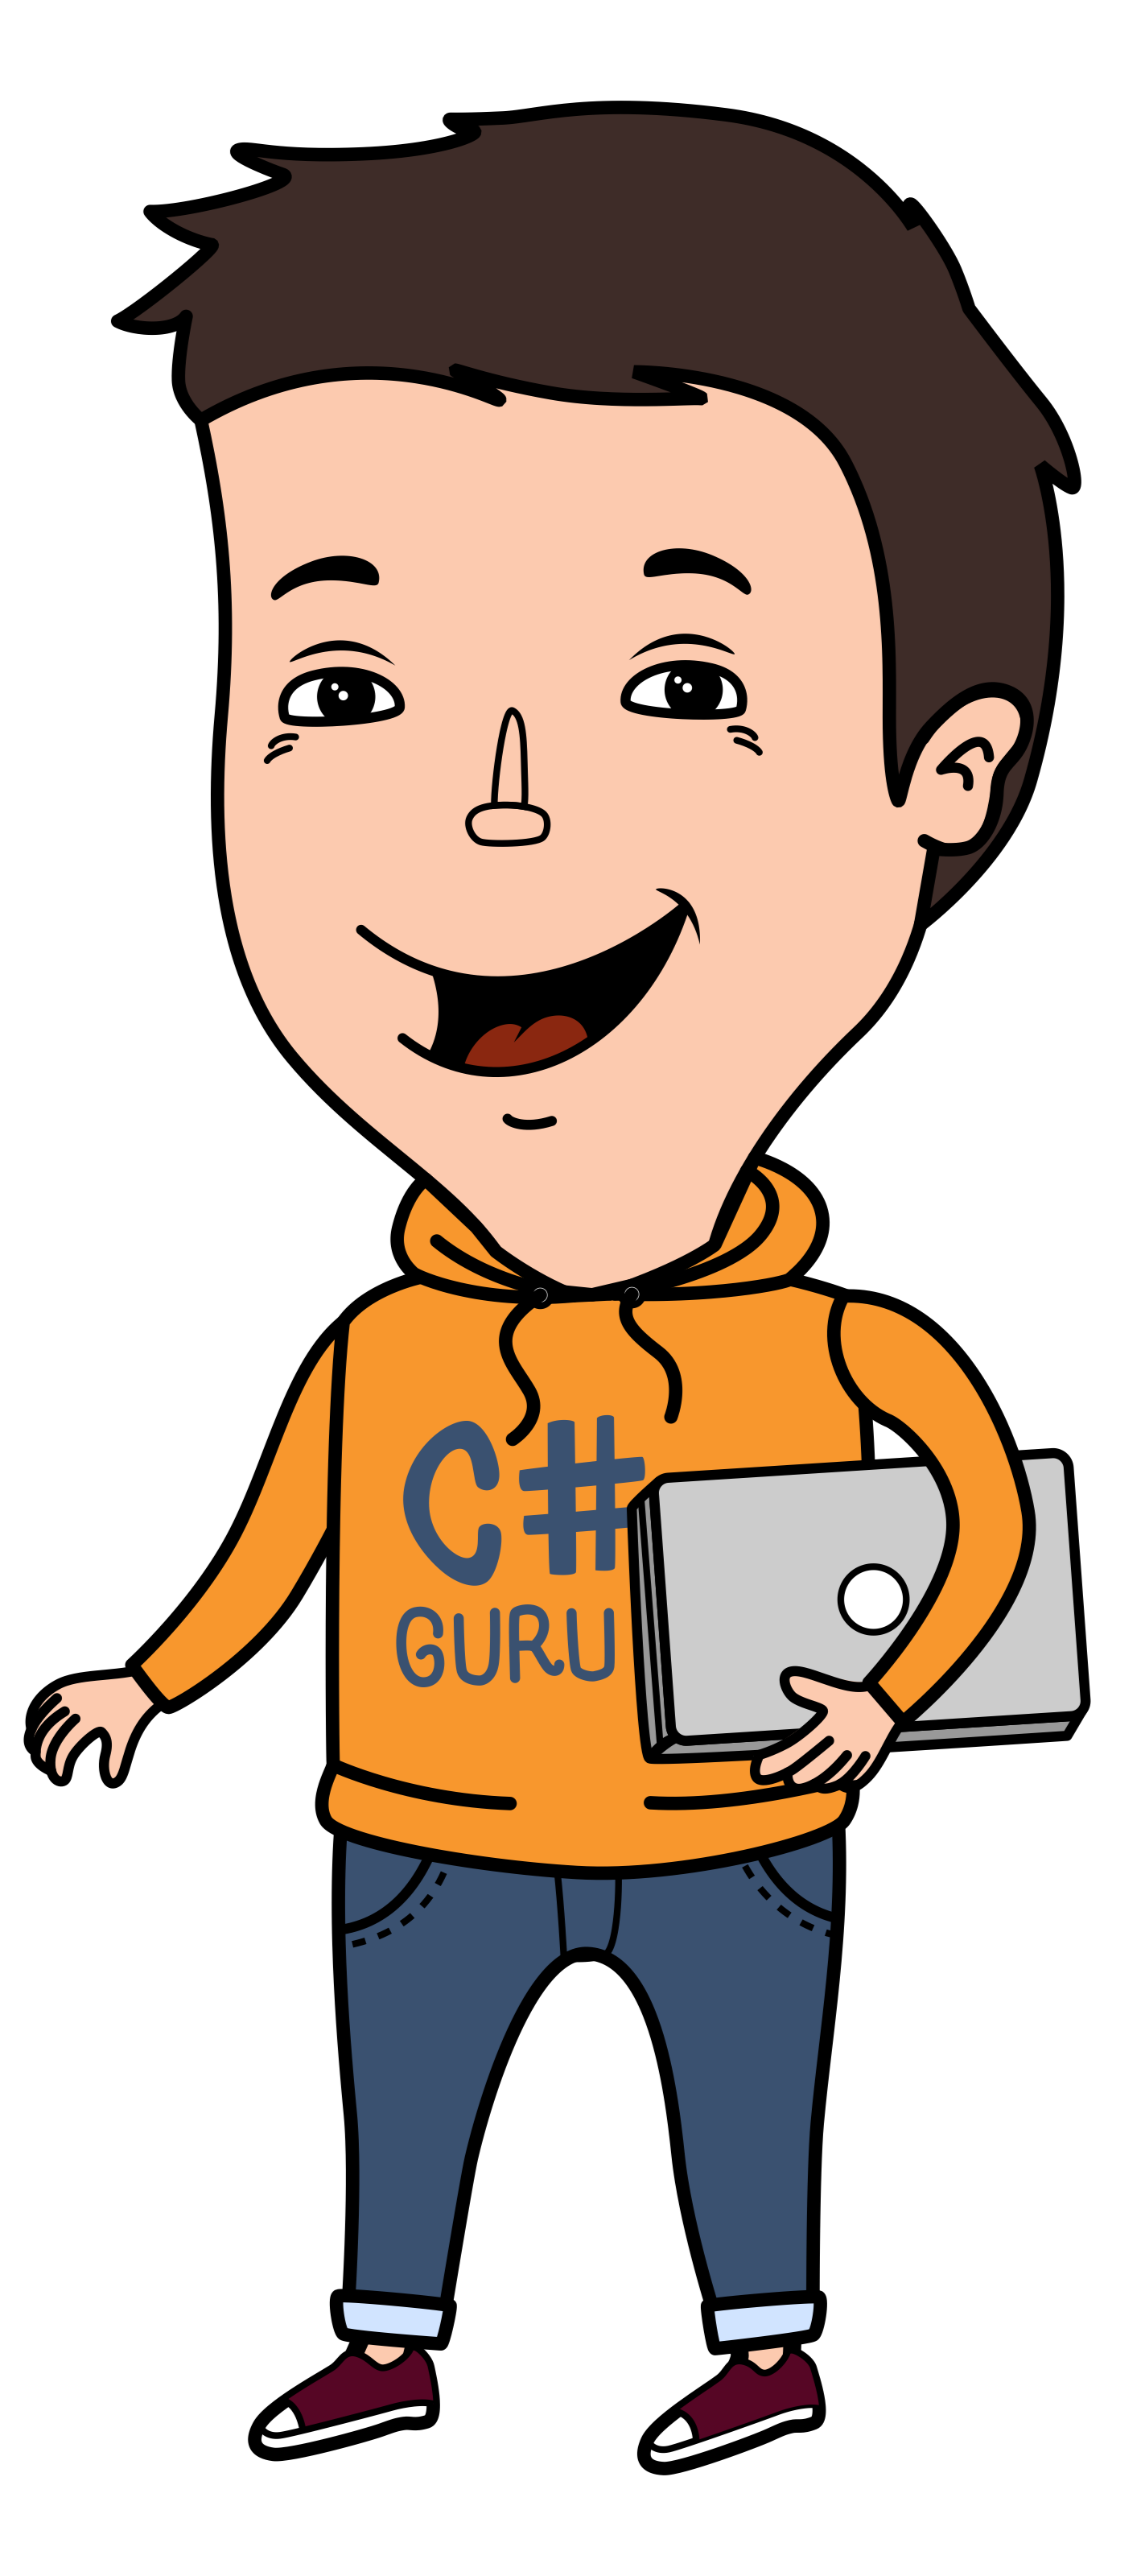 Cartoon of man with orange jumper and C# Guru written in it, holding a laptop